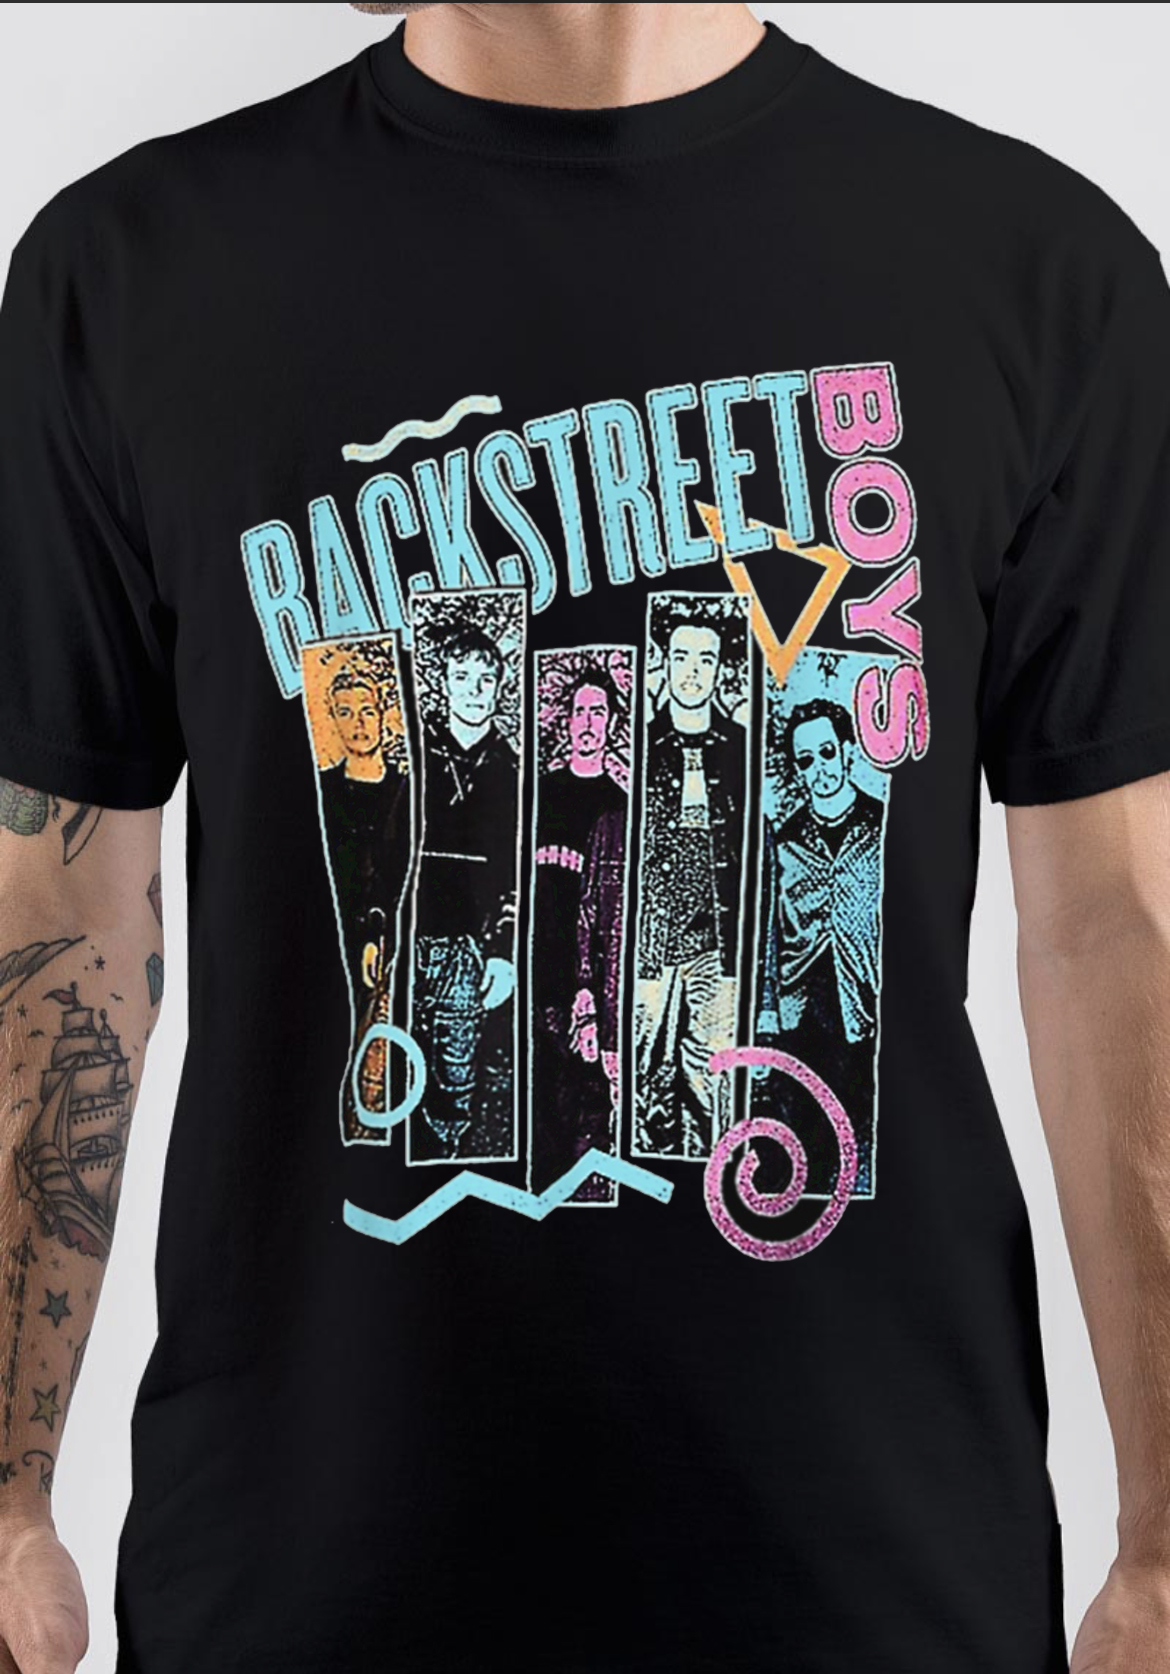 Backstreet Boys T-Shirt And merchandise